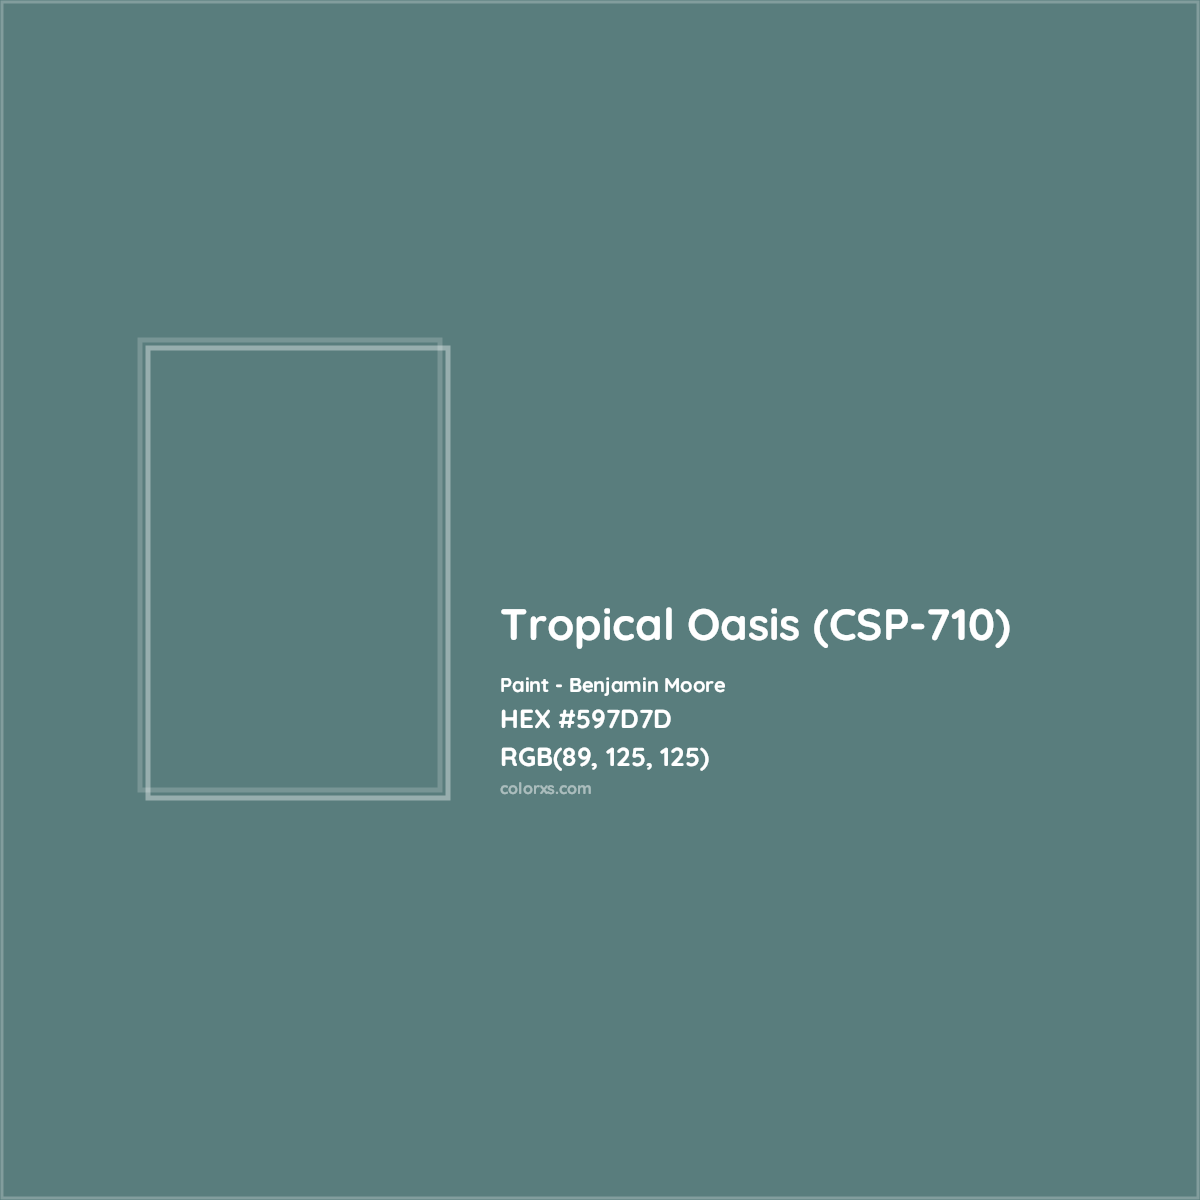 HEX #597D7D Tropical Oasis (CSP-710) Paint Benjamin Moore - Color Code